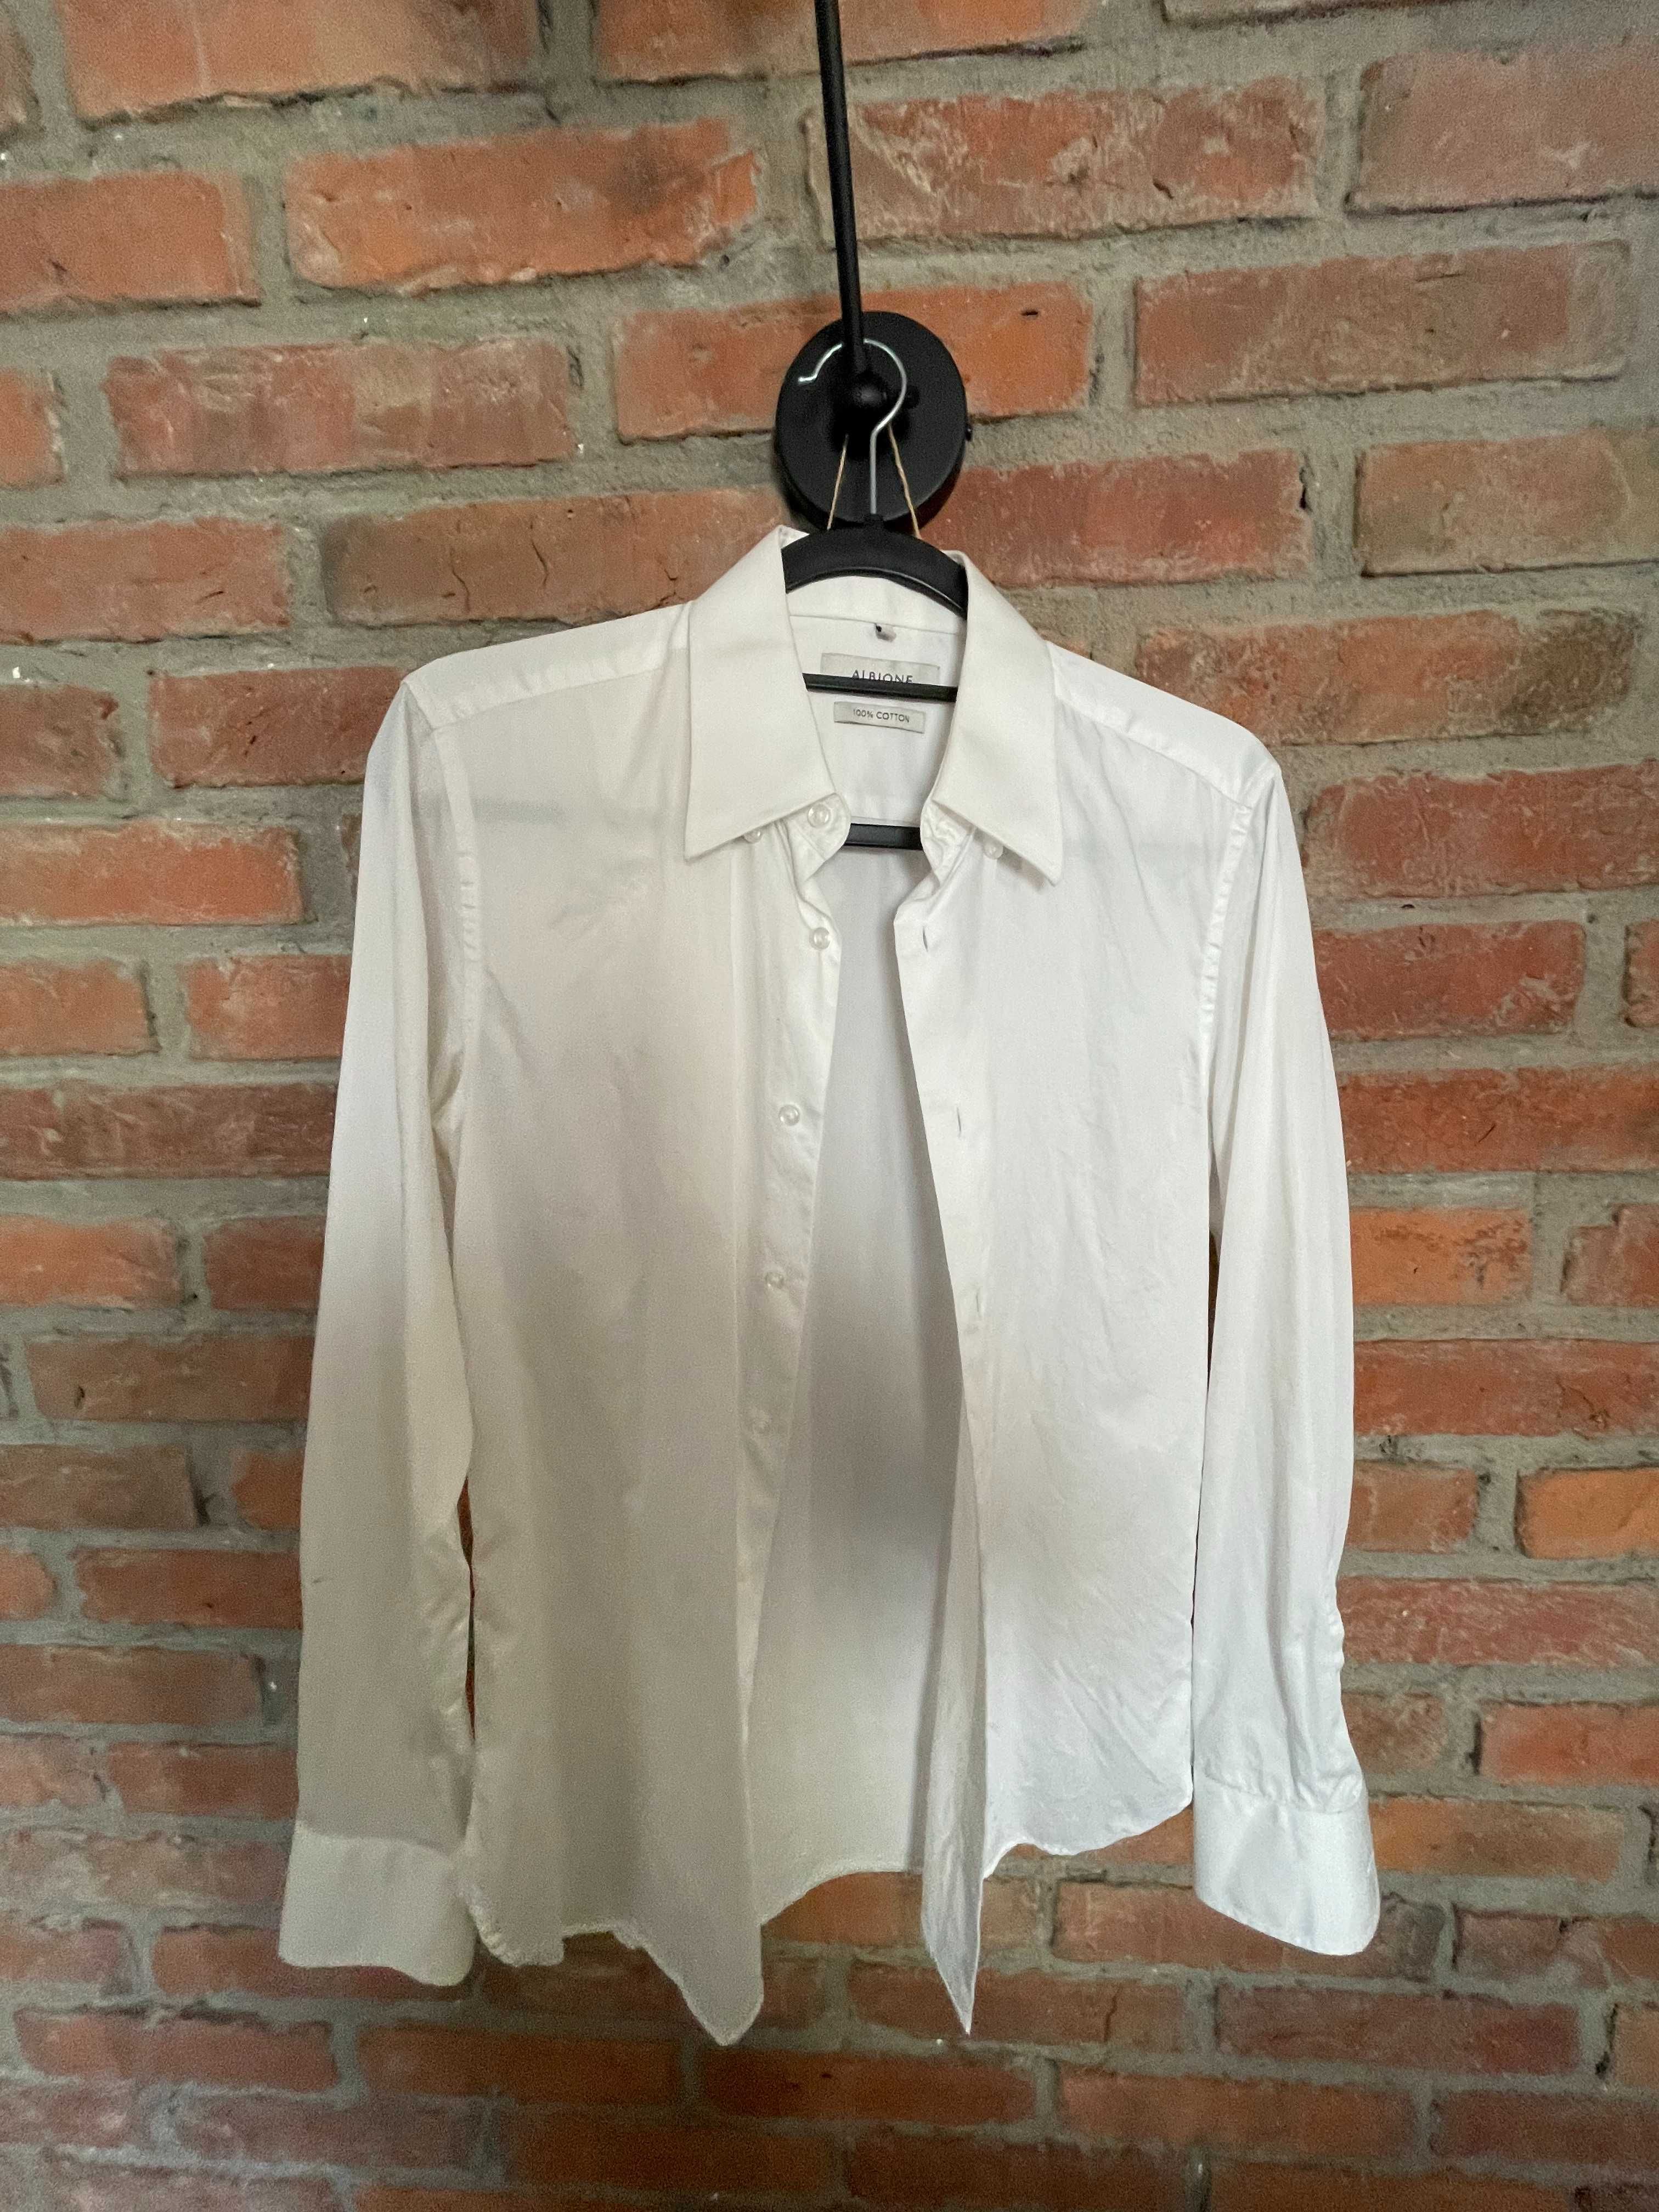 GARNITUR ALBIONE + biała koszula gratis